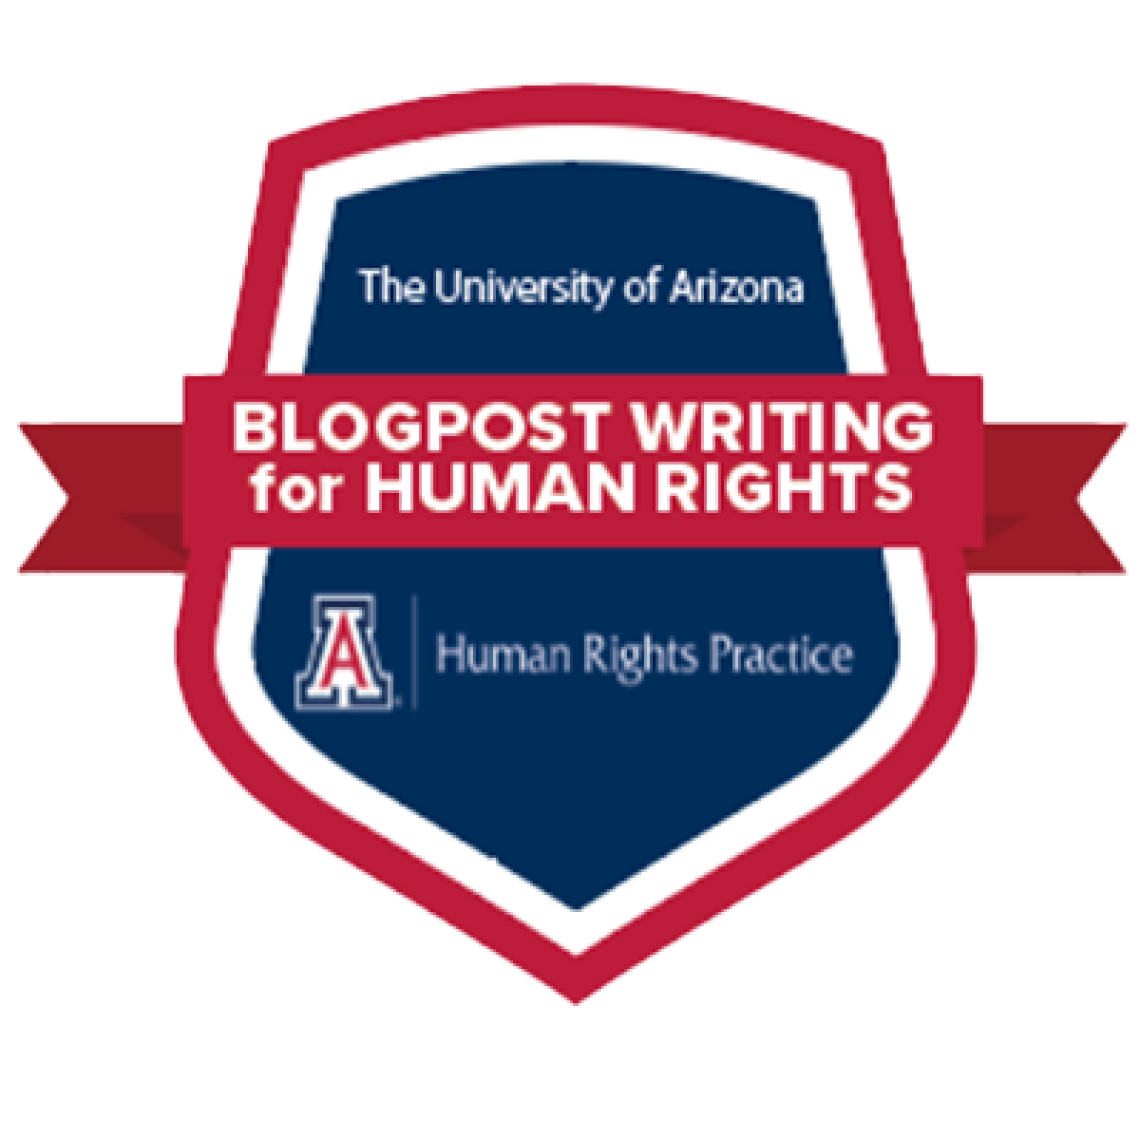 Blogpost Writing for Human Rights badge